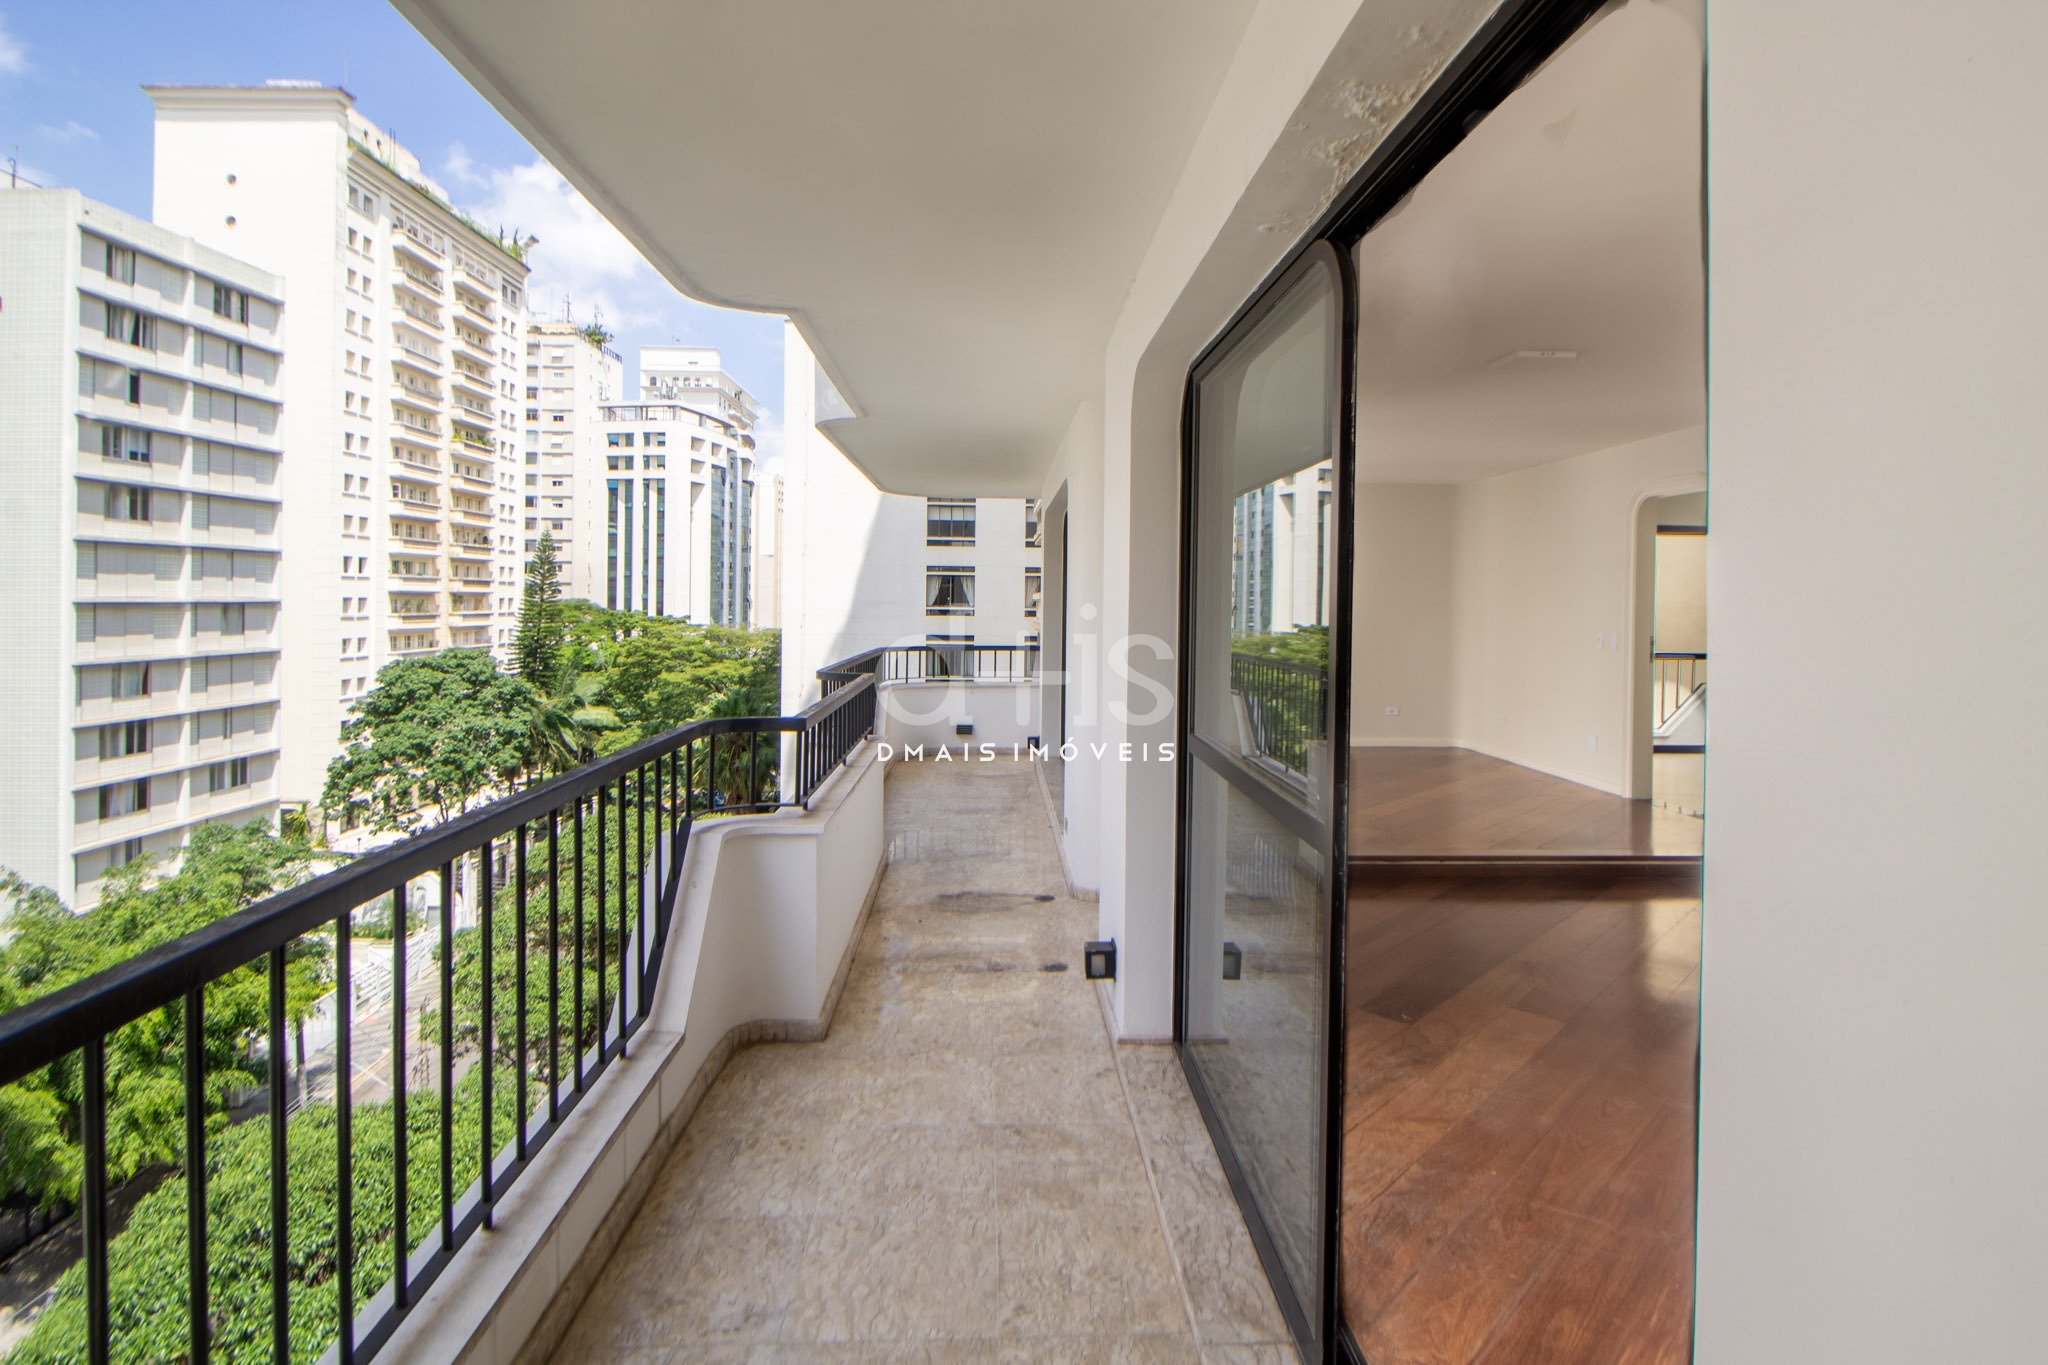 Apartamento amplo totalmente reformado no Jardim Paulista.